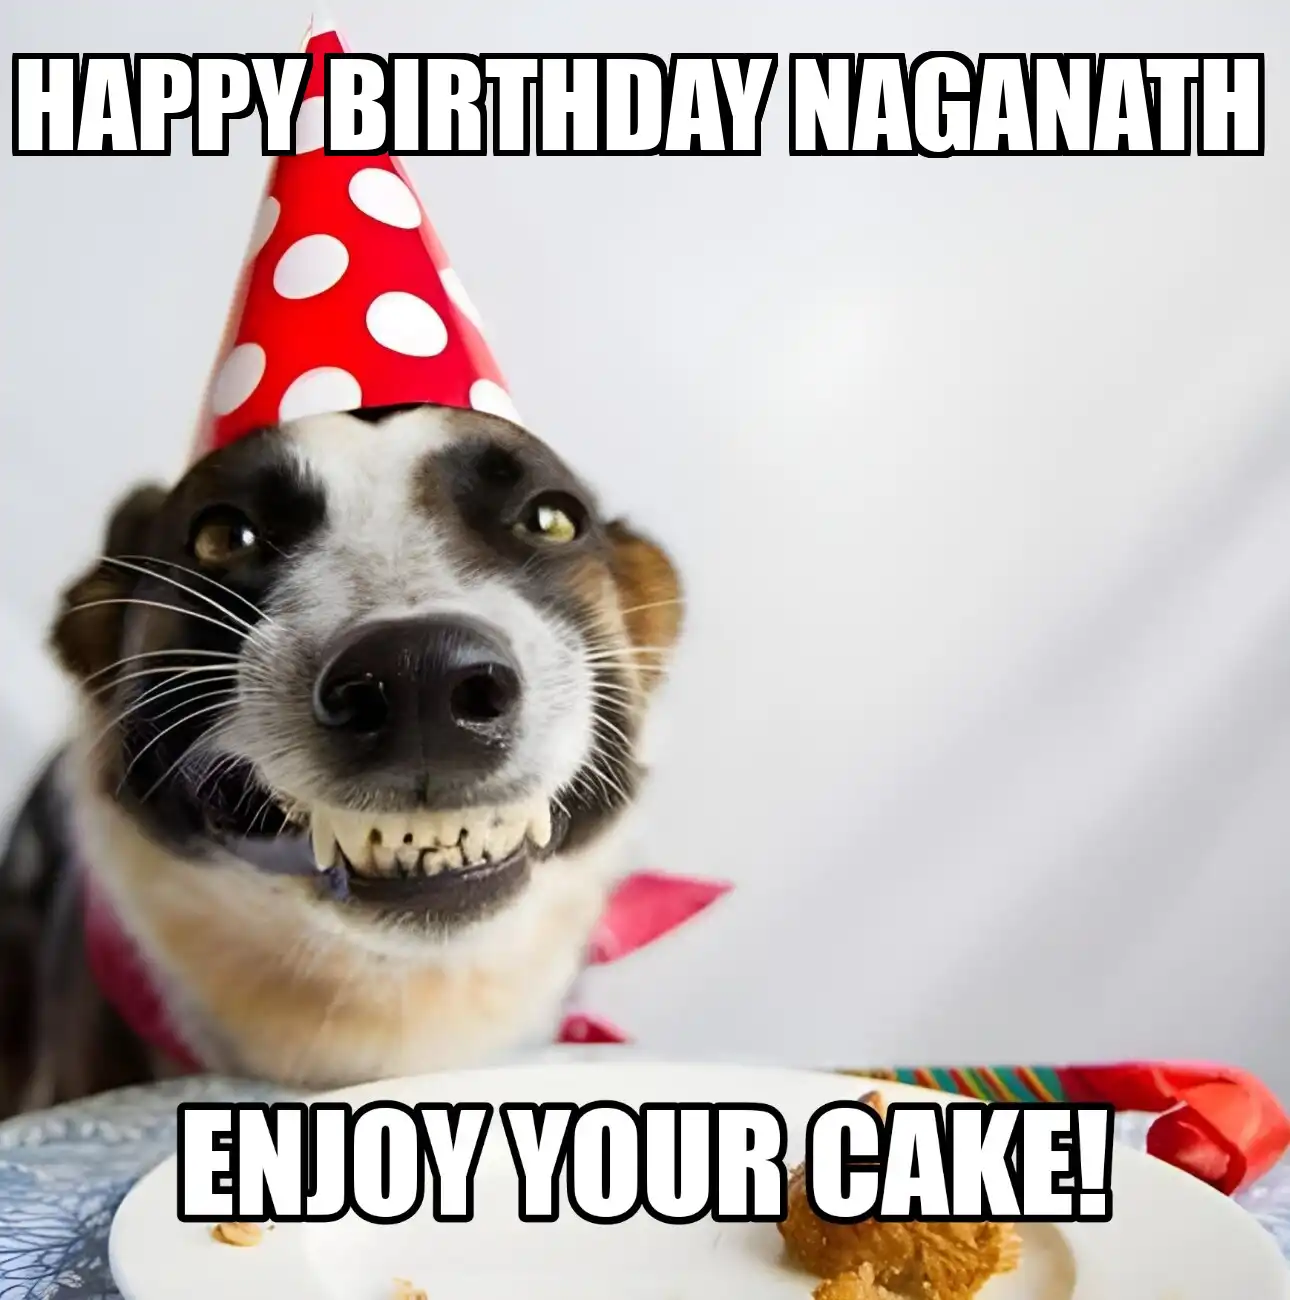 Happy Birthday Naganath Enjoy Your Cake Dog Meme